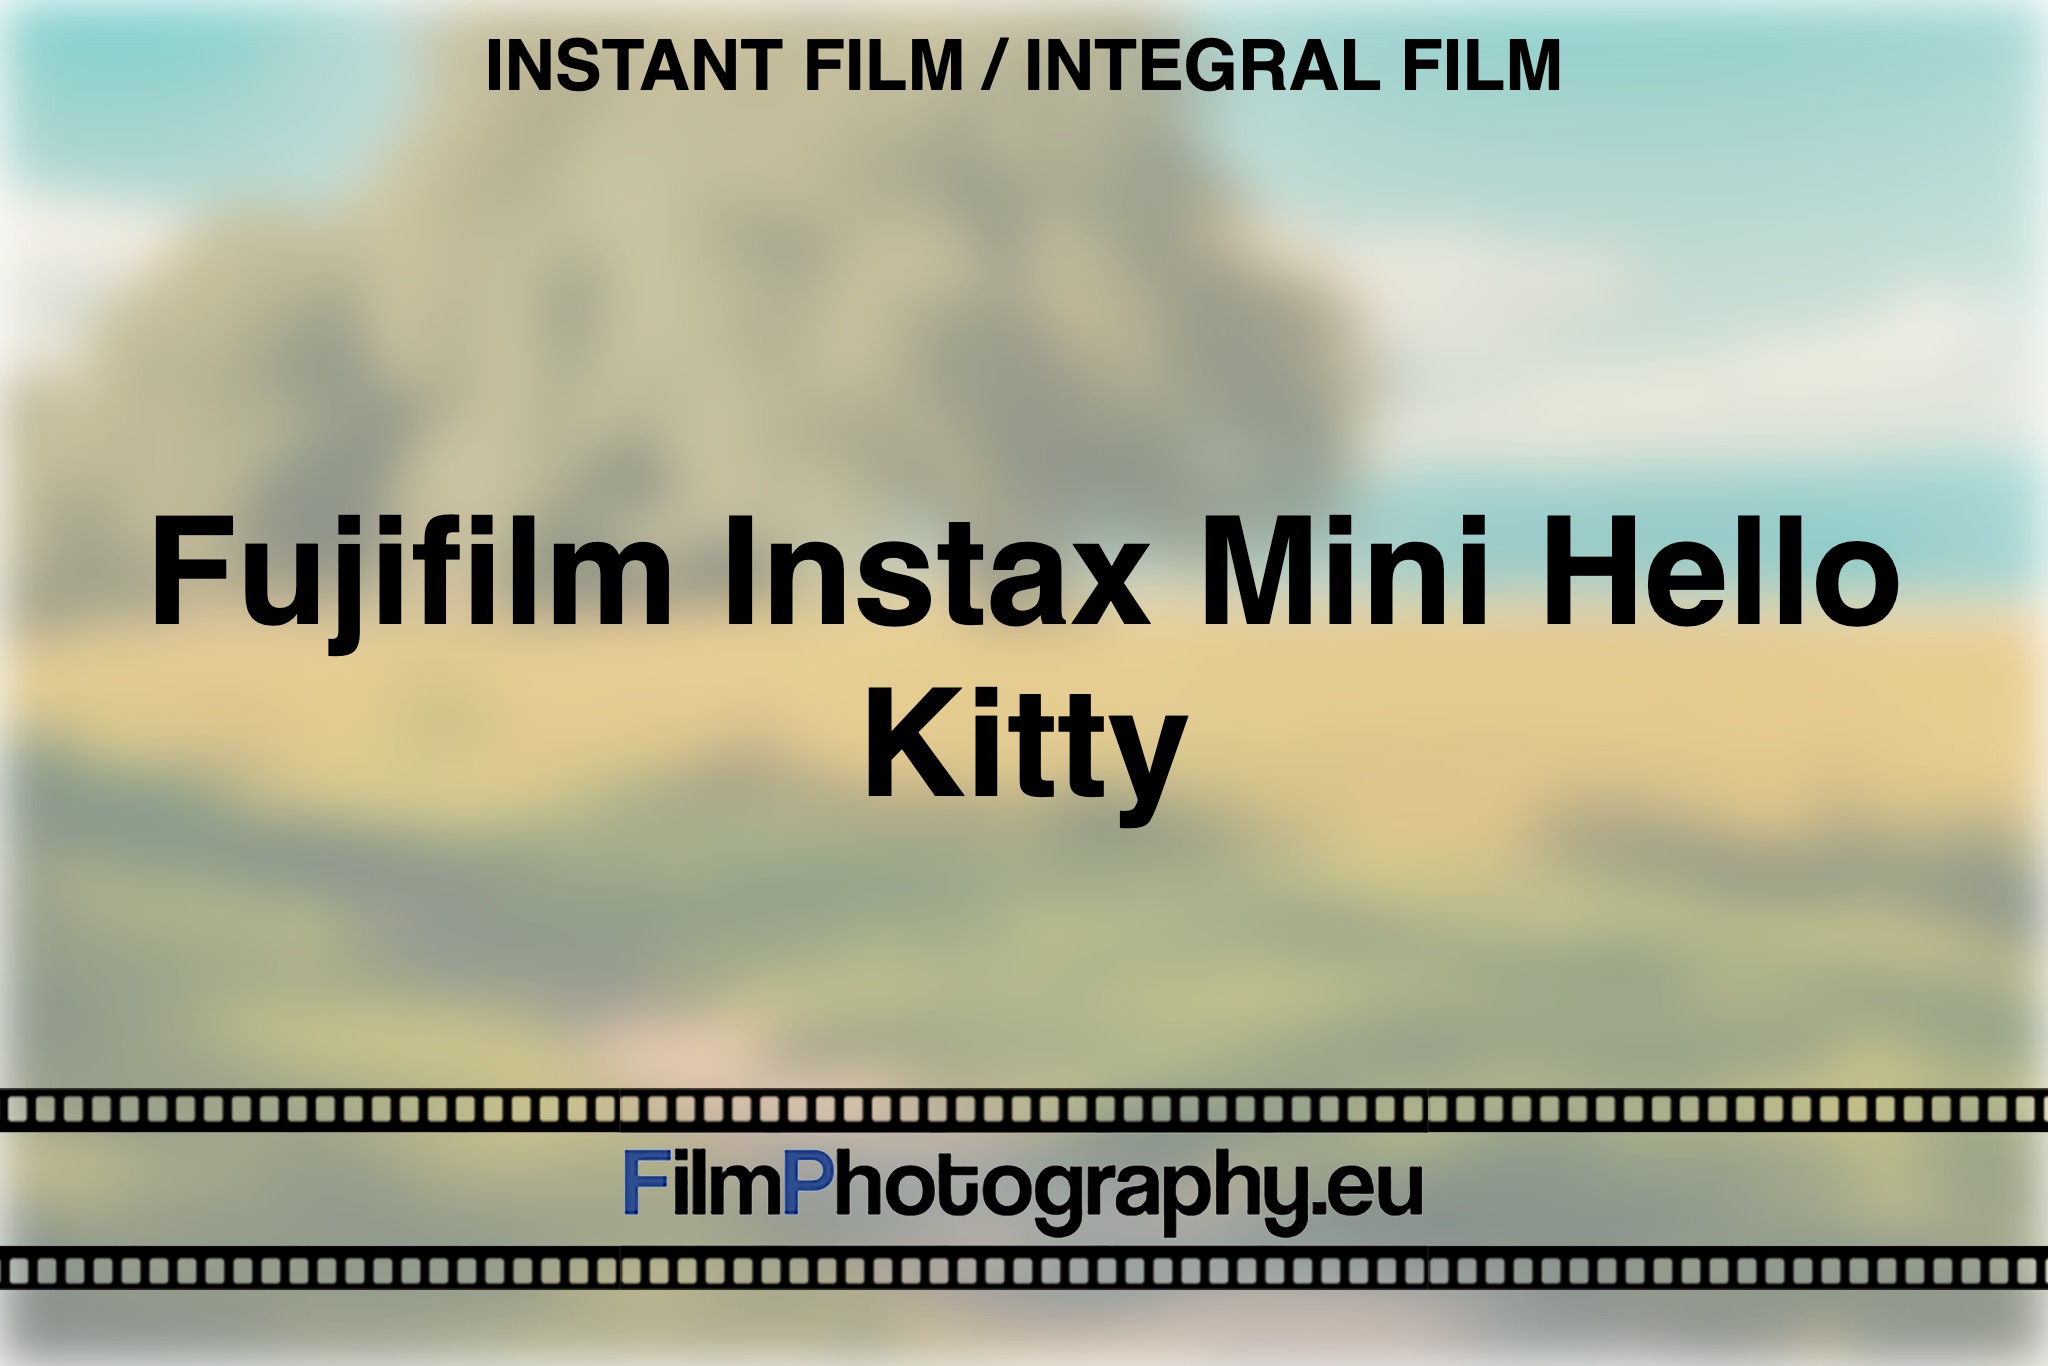 fujifilm-instax-mini-hello-kitty-instant-film-integral-film-bnv